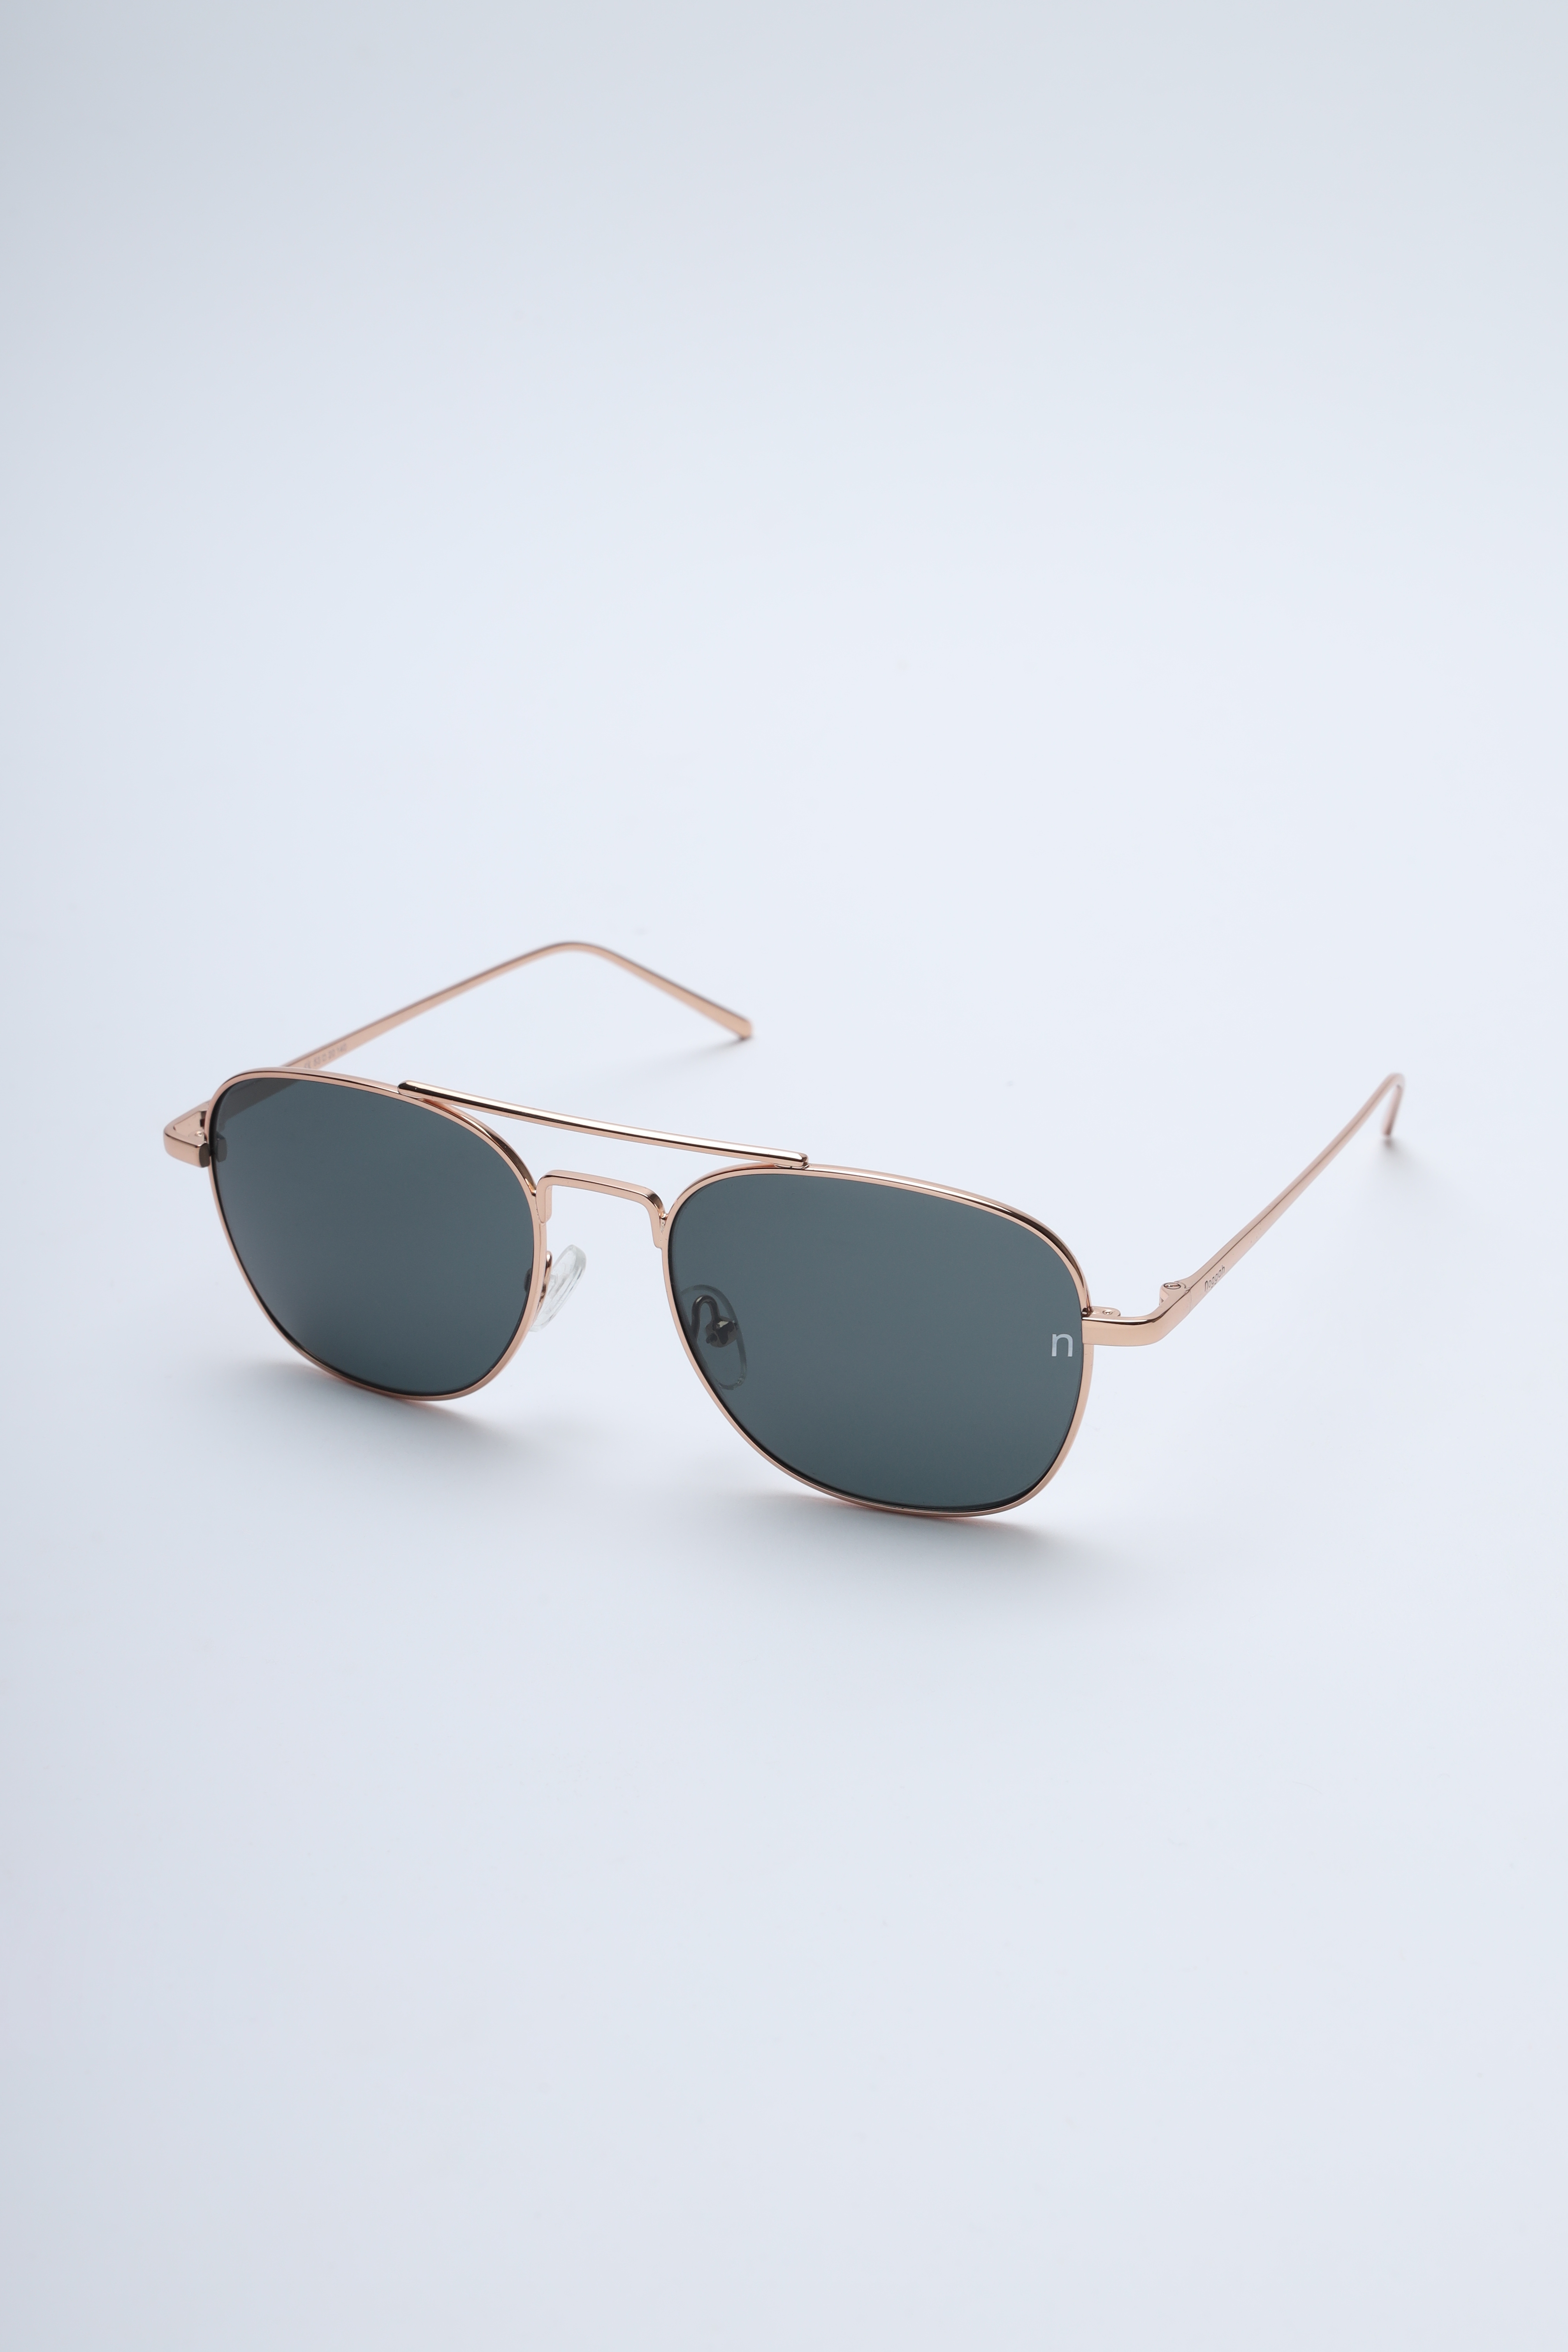 Noggah | Noggah Stainless Steel Gold Frame with Black Glass UV Protection Lens  Large Size Unisex Sunglasses